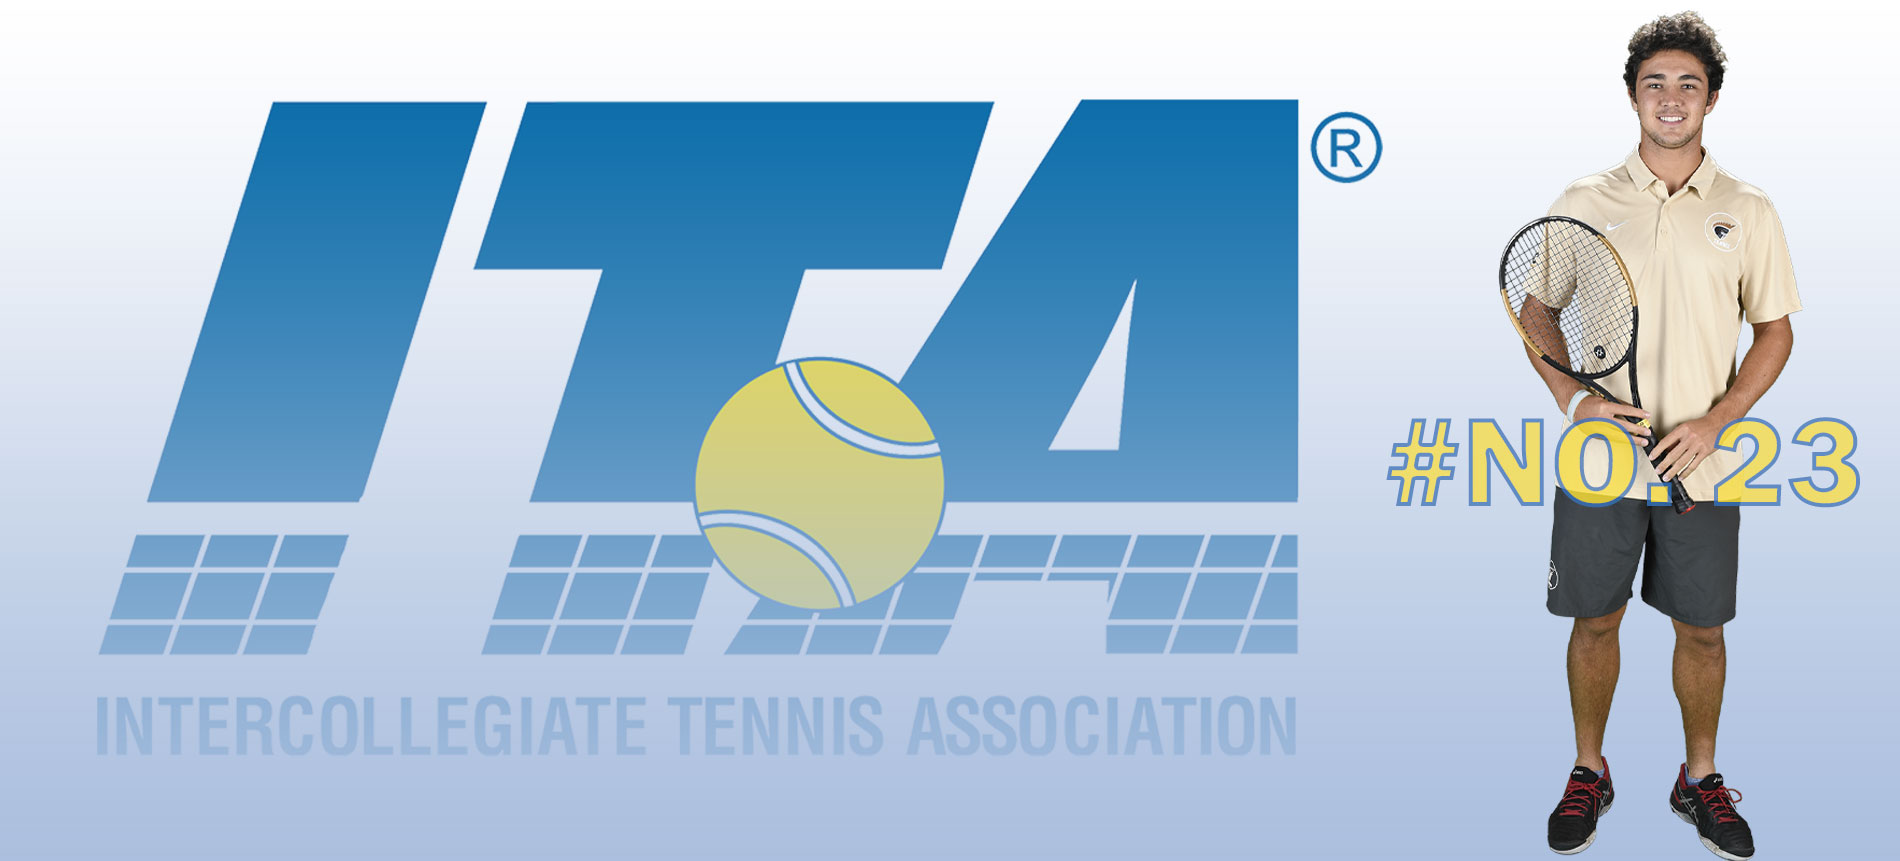 Bidegain Slotted No. 23 in Final Fall ITA National Rankings